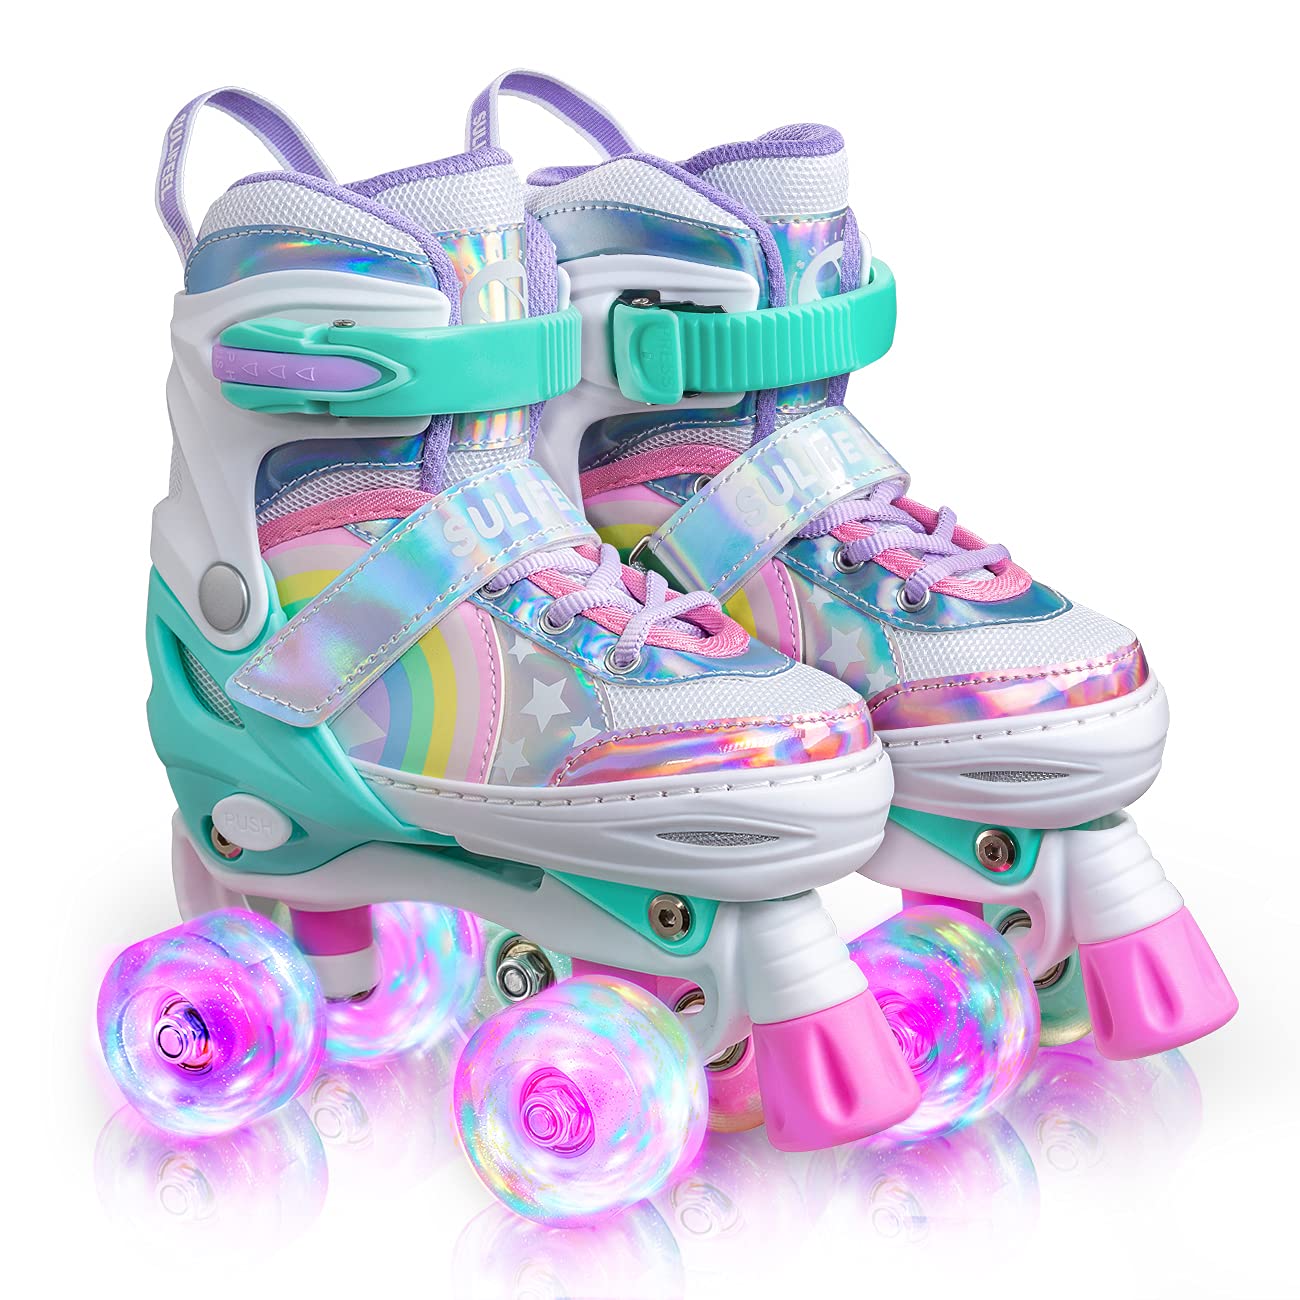 SULIFEEL 彩虹独角兽 4 尺寸可调节发光溜冰鞋适合女孩男孩儿童